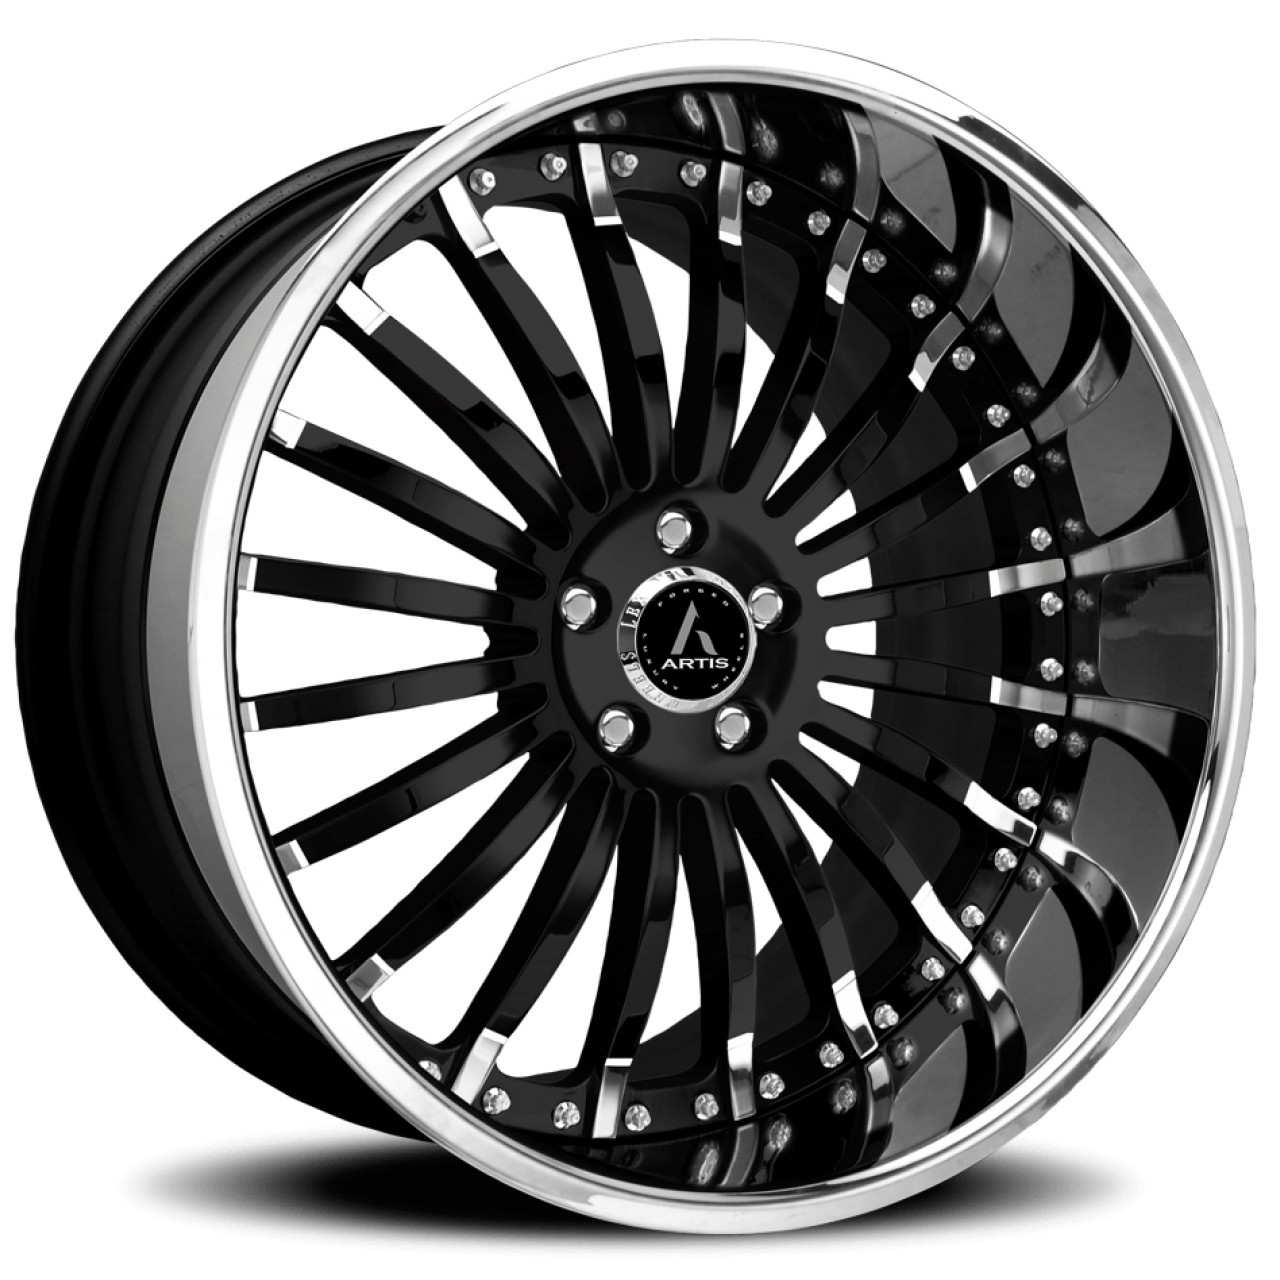 Artis Coronado forged wheels